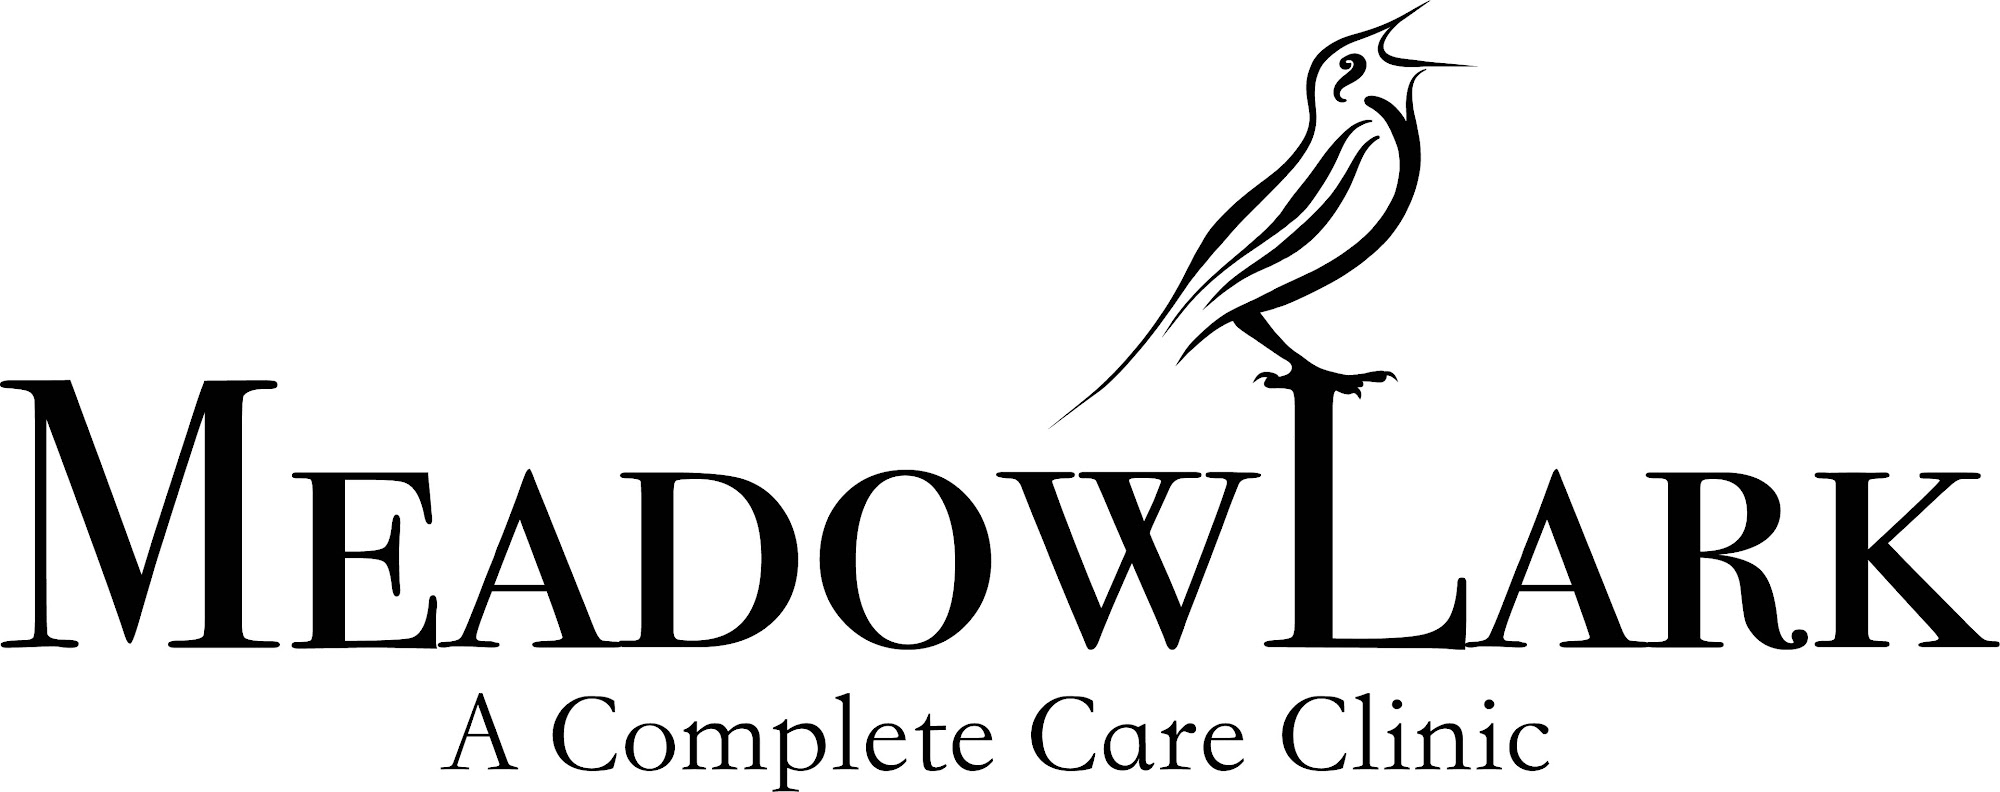 Meadowlark Clinic 1016 W Spruce St STE A, Rawlins Wyoming 82301